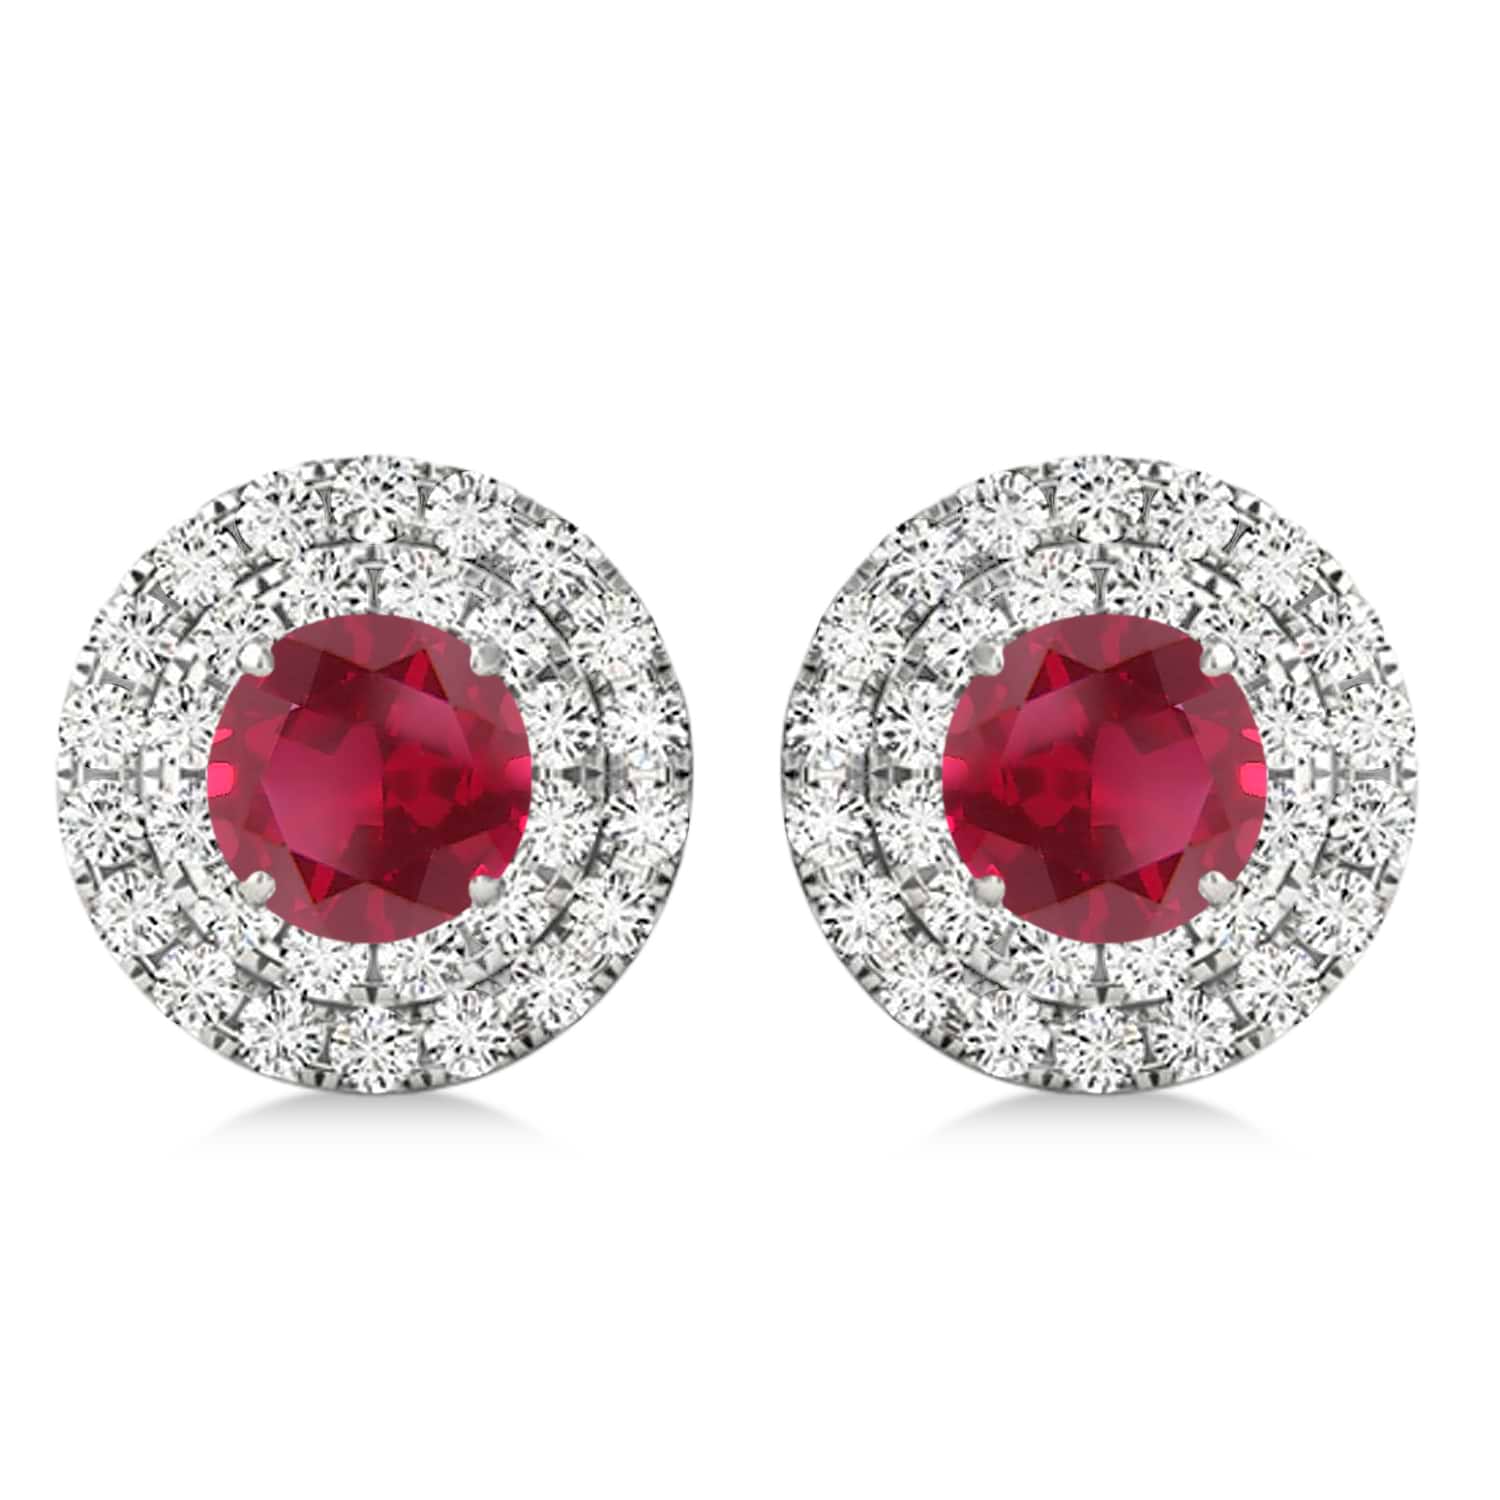 Round Double Halo Diamond & Ruby Earrings 14k White Gold 1.65ct